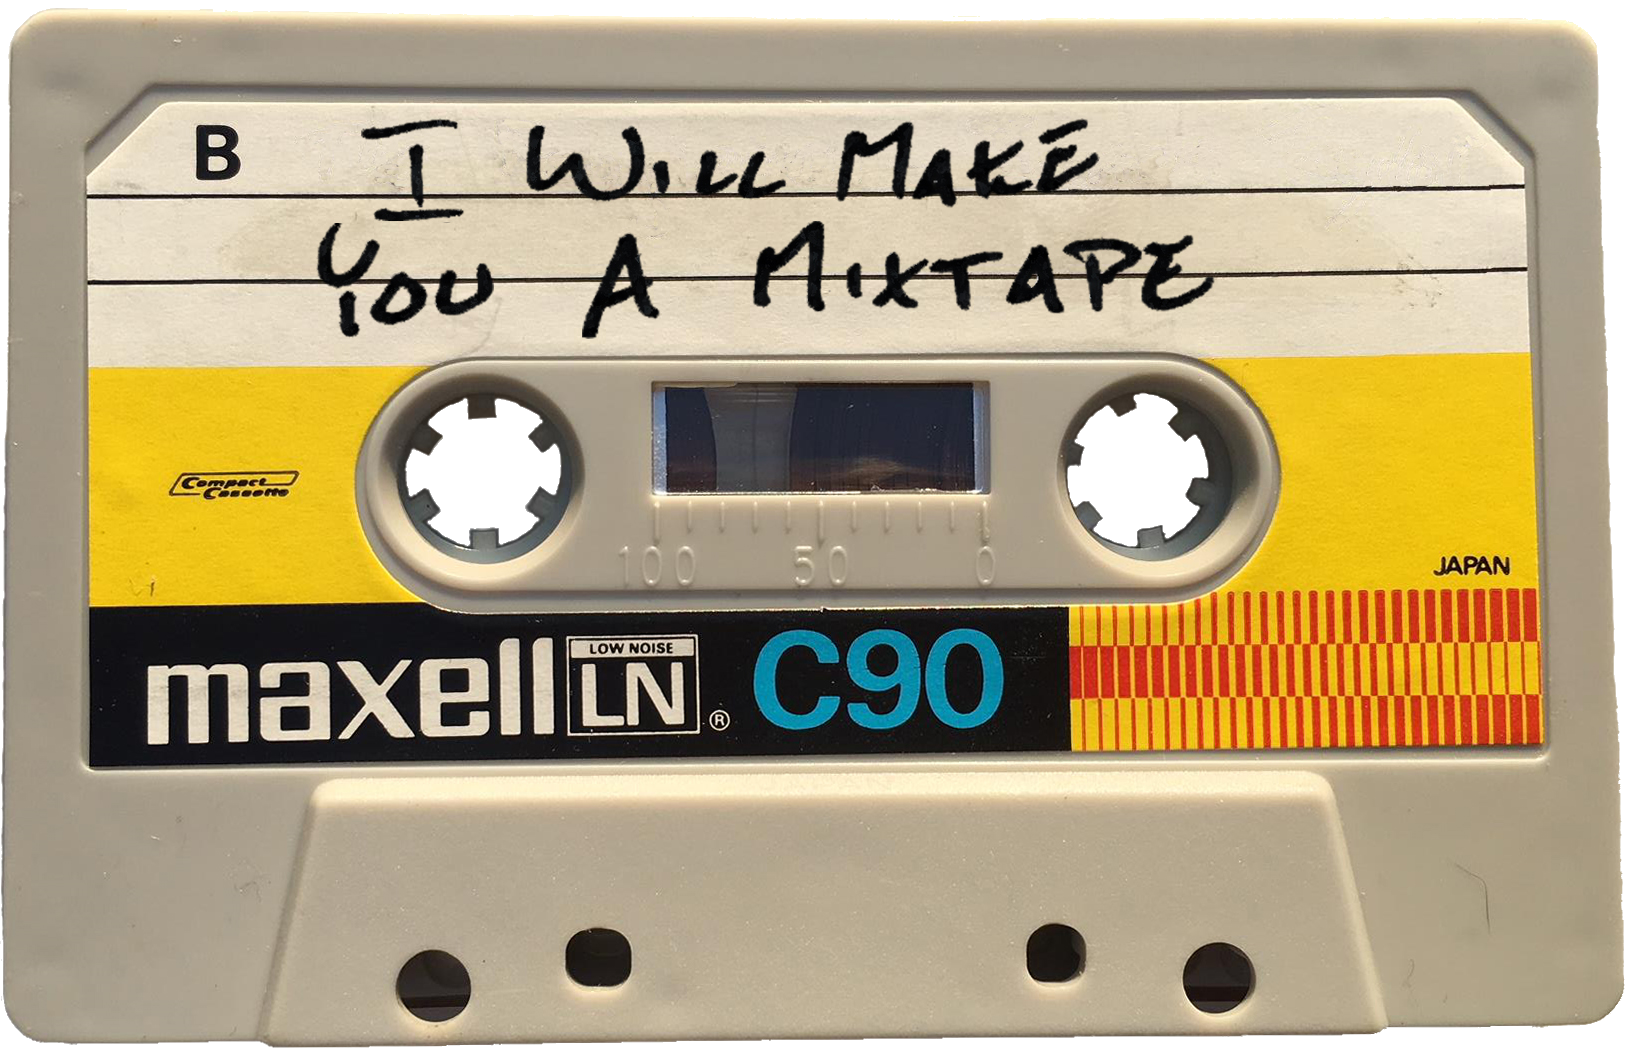 I Will Make You a Mixtape